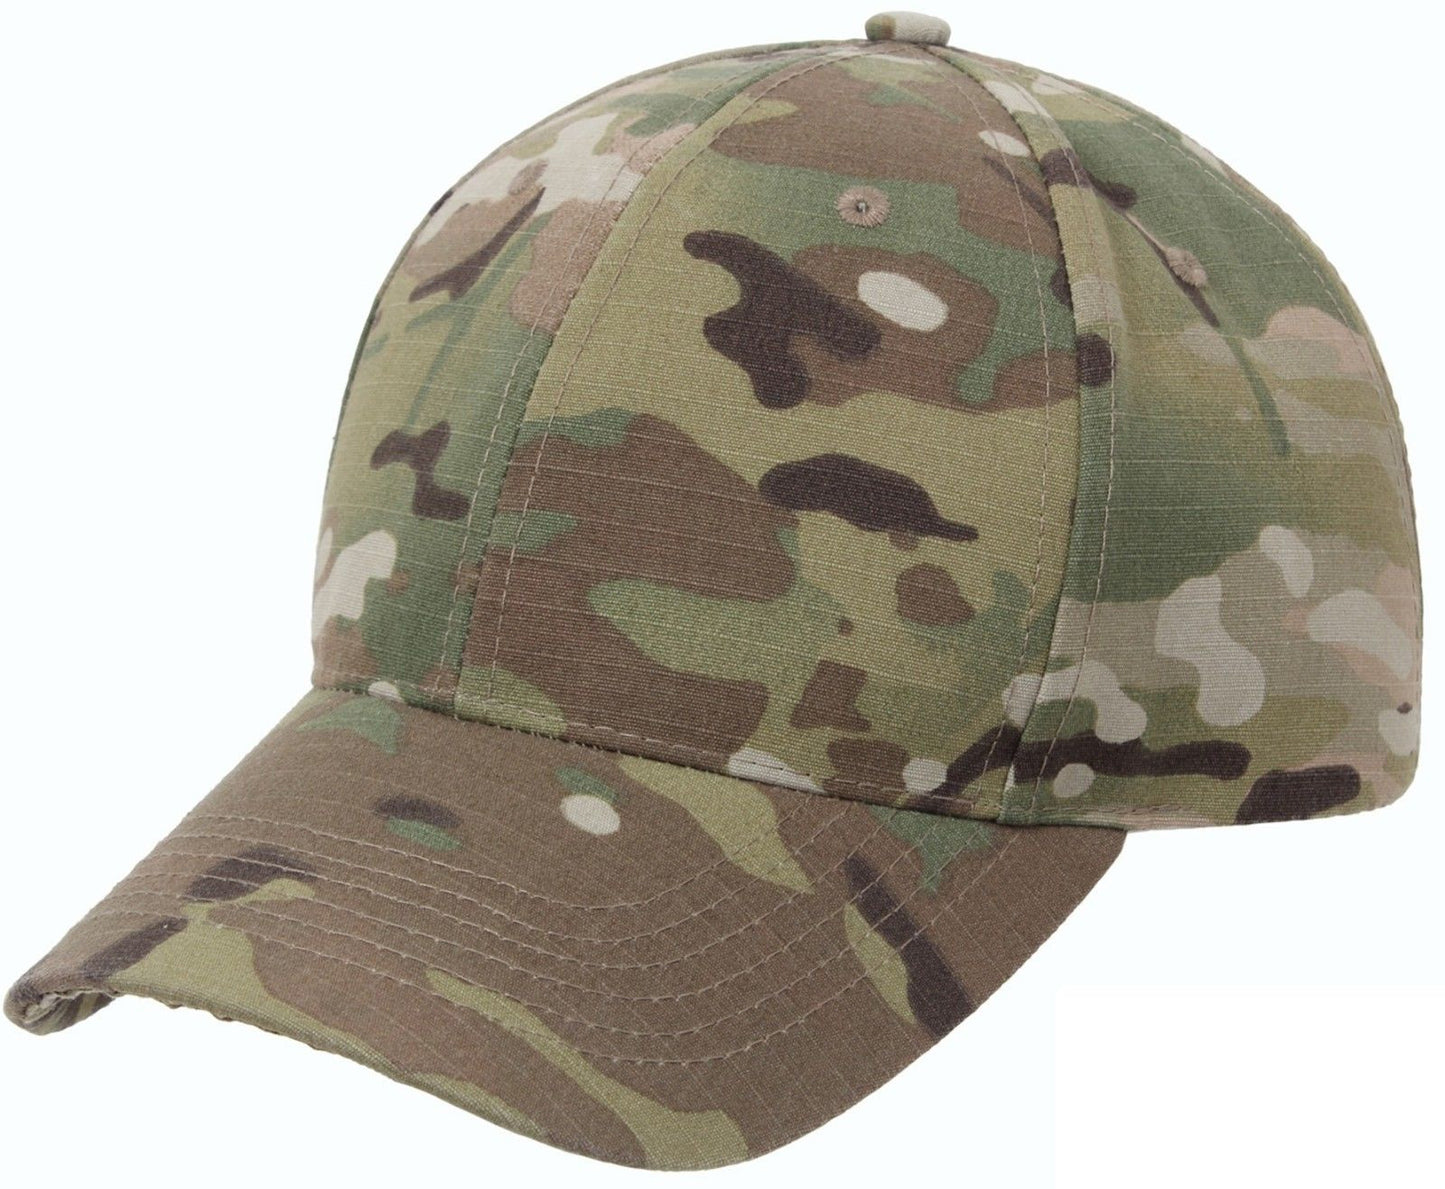 Mens MultiCam Hat Low Profile Multi Cam Camo Camouflage Adjustable Vented Cap